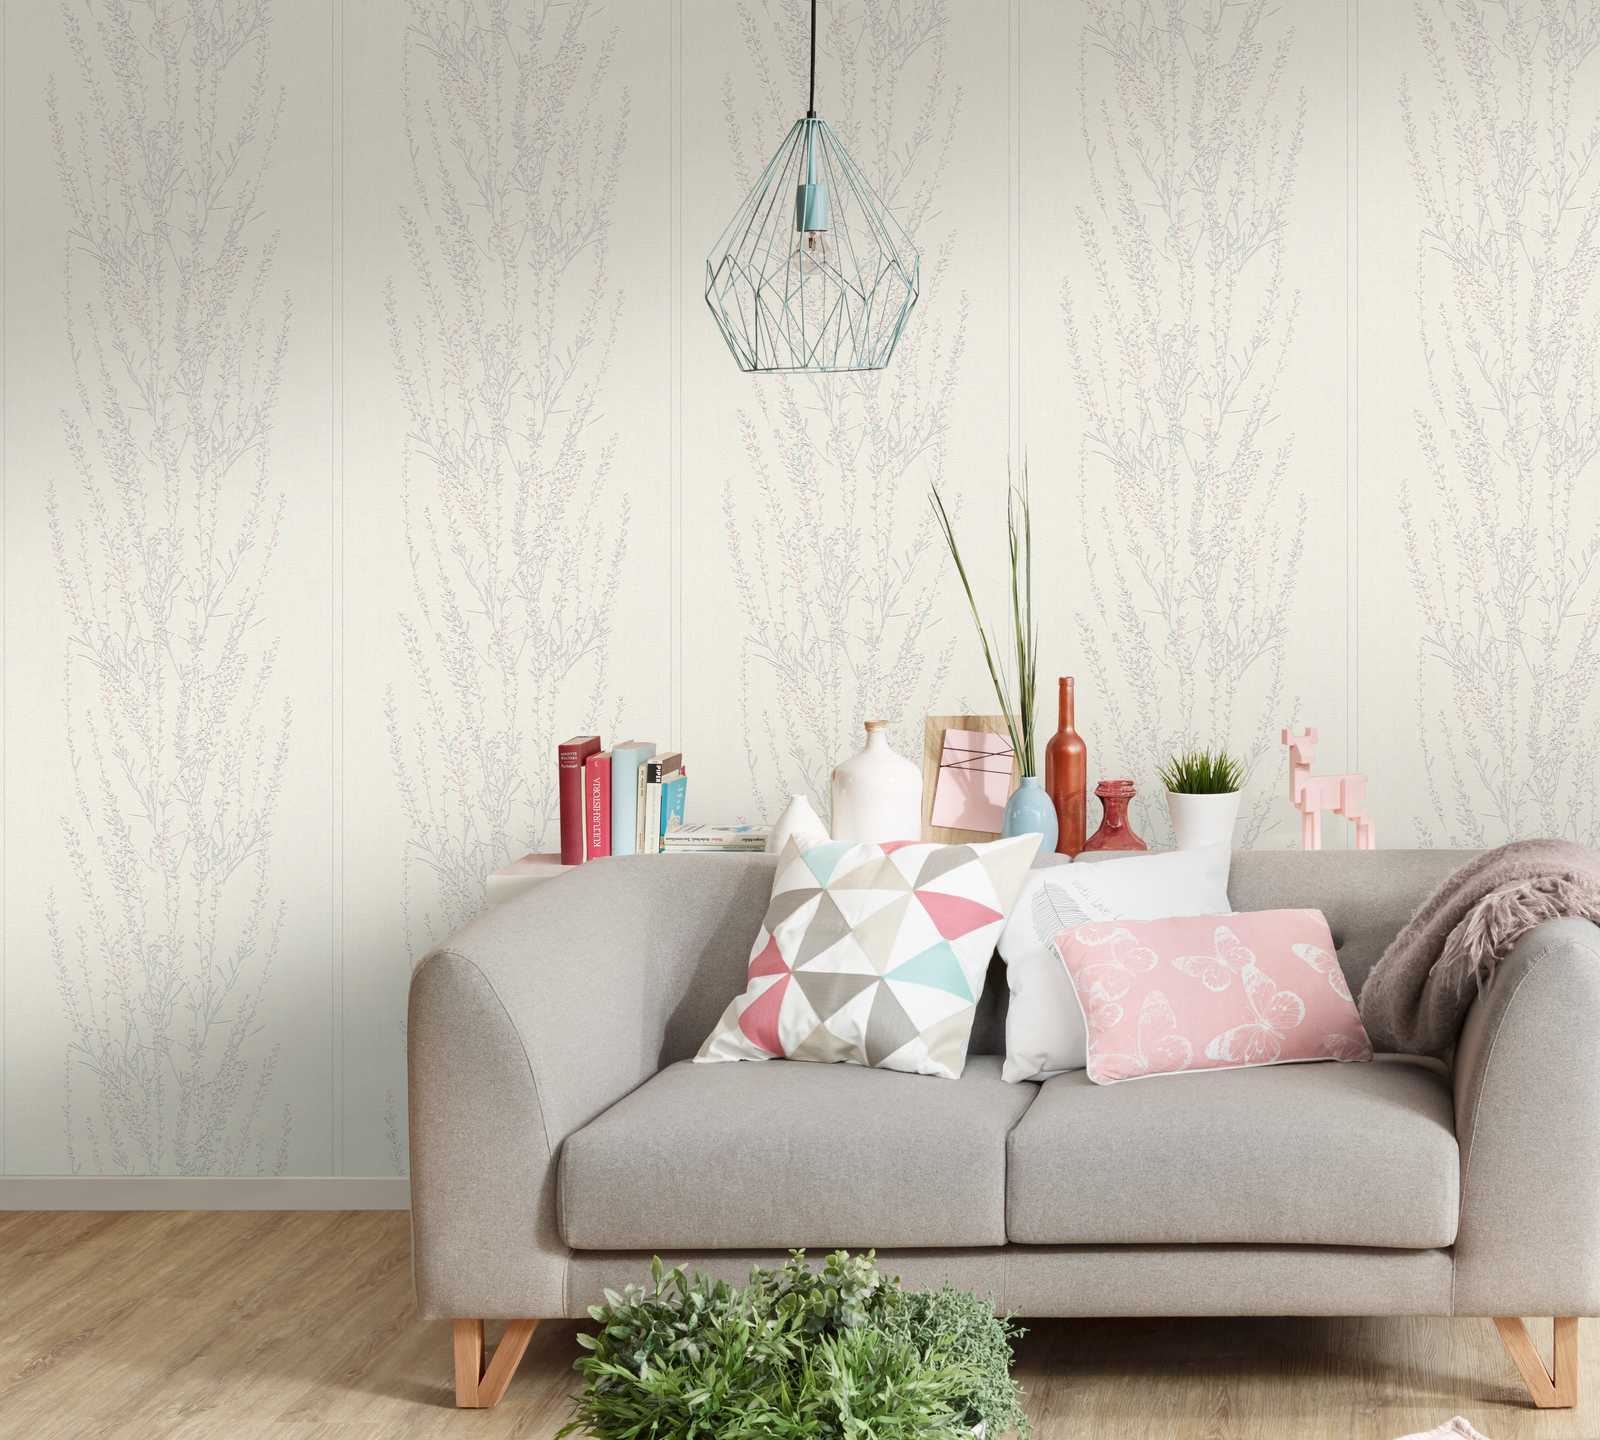             Wallpaper leaf pattern textured, 3D effect - grey, metallic, pink
        